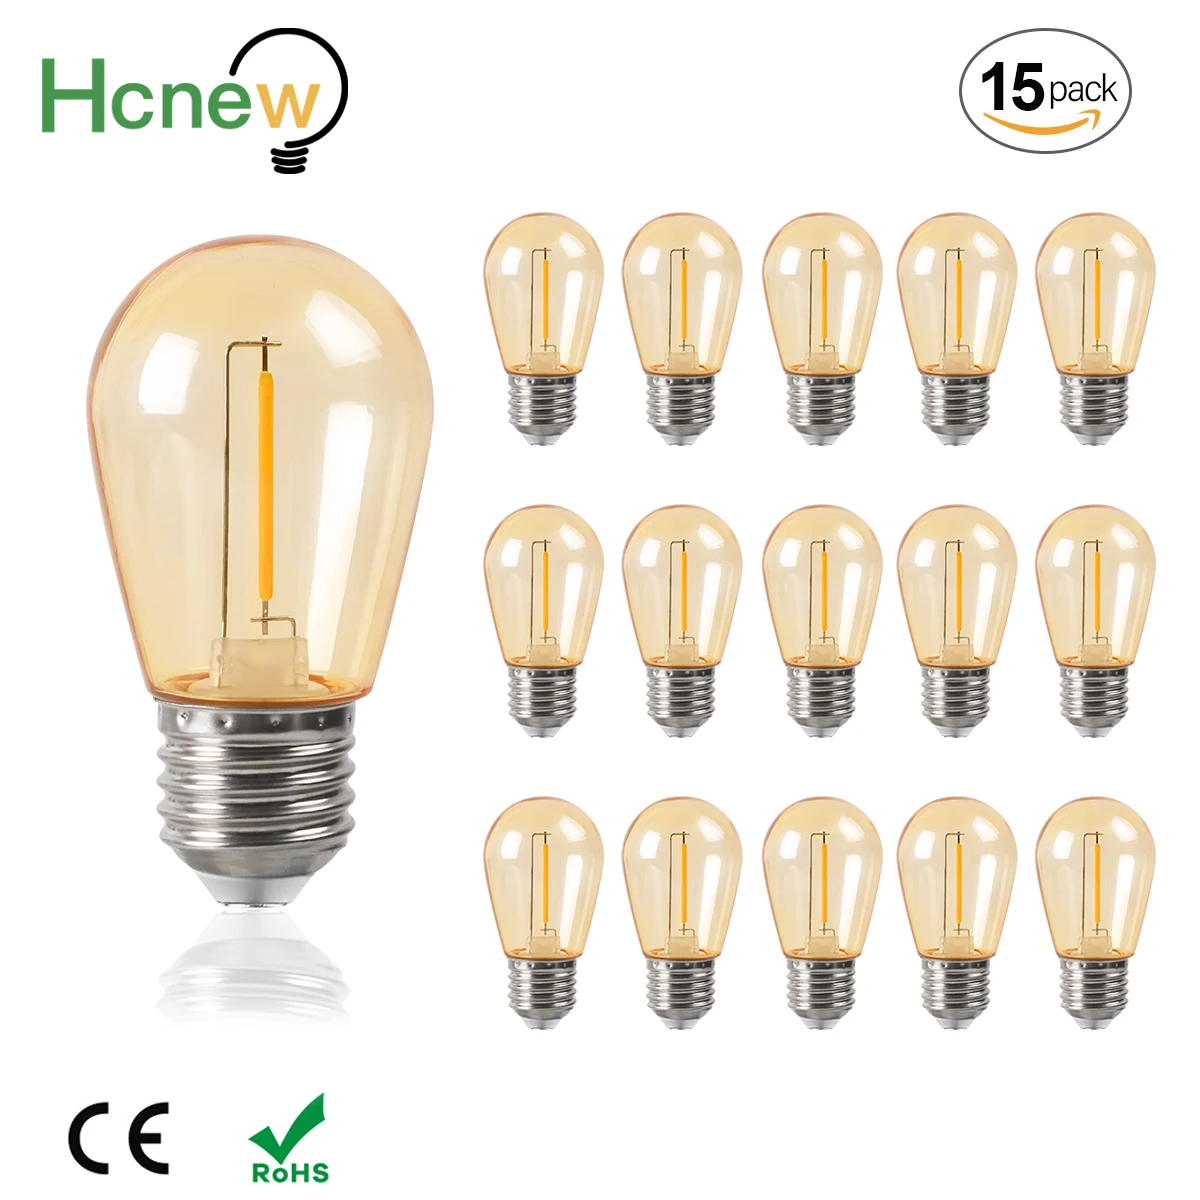 C02 - LED light bulb G45 gold spiral filament